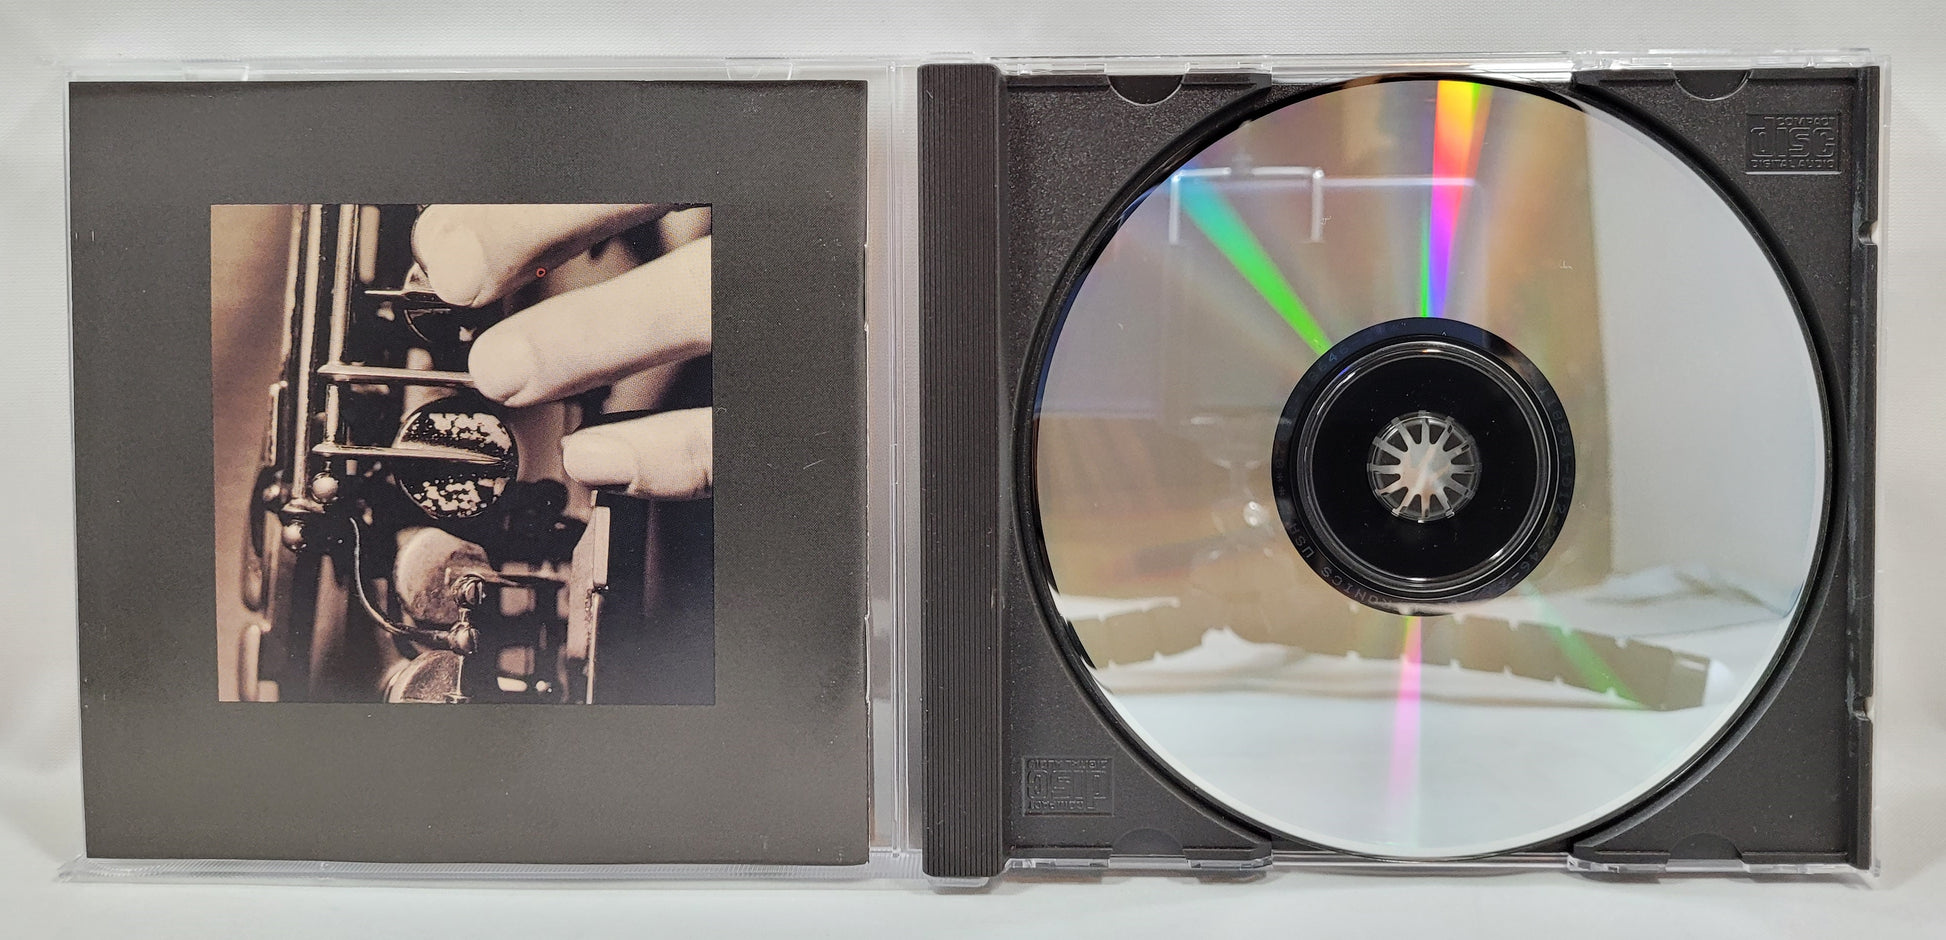 Kenny G - Breathless [1992 Used CD]